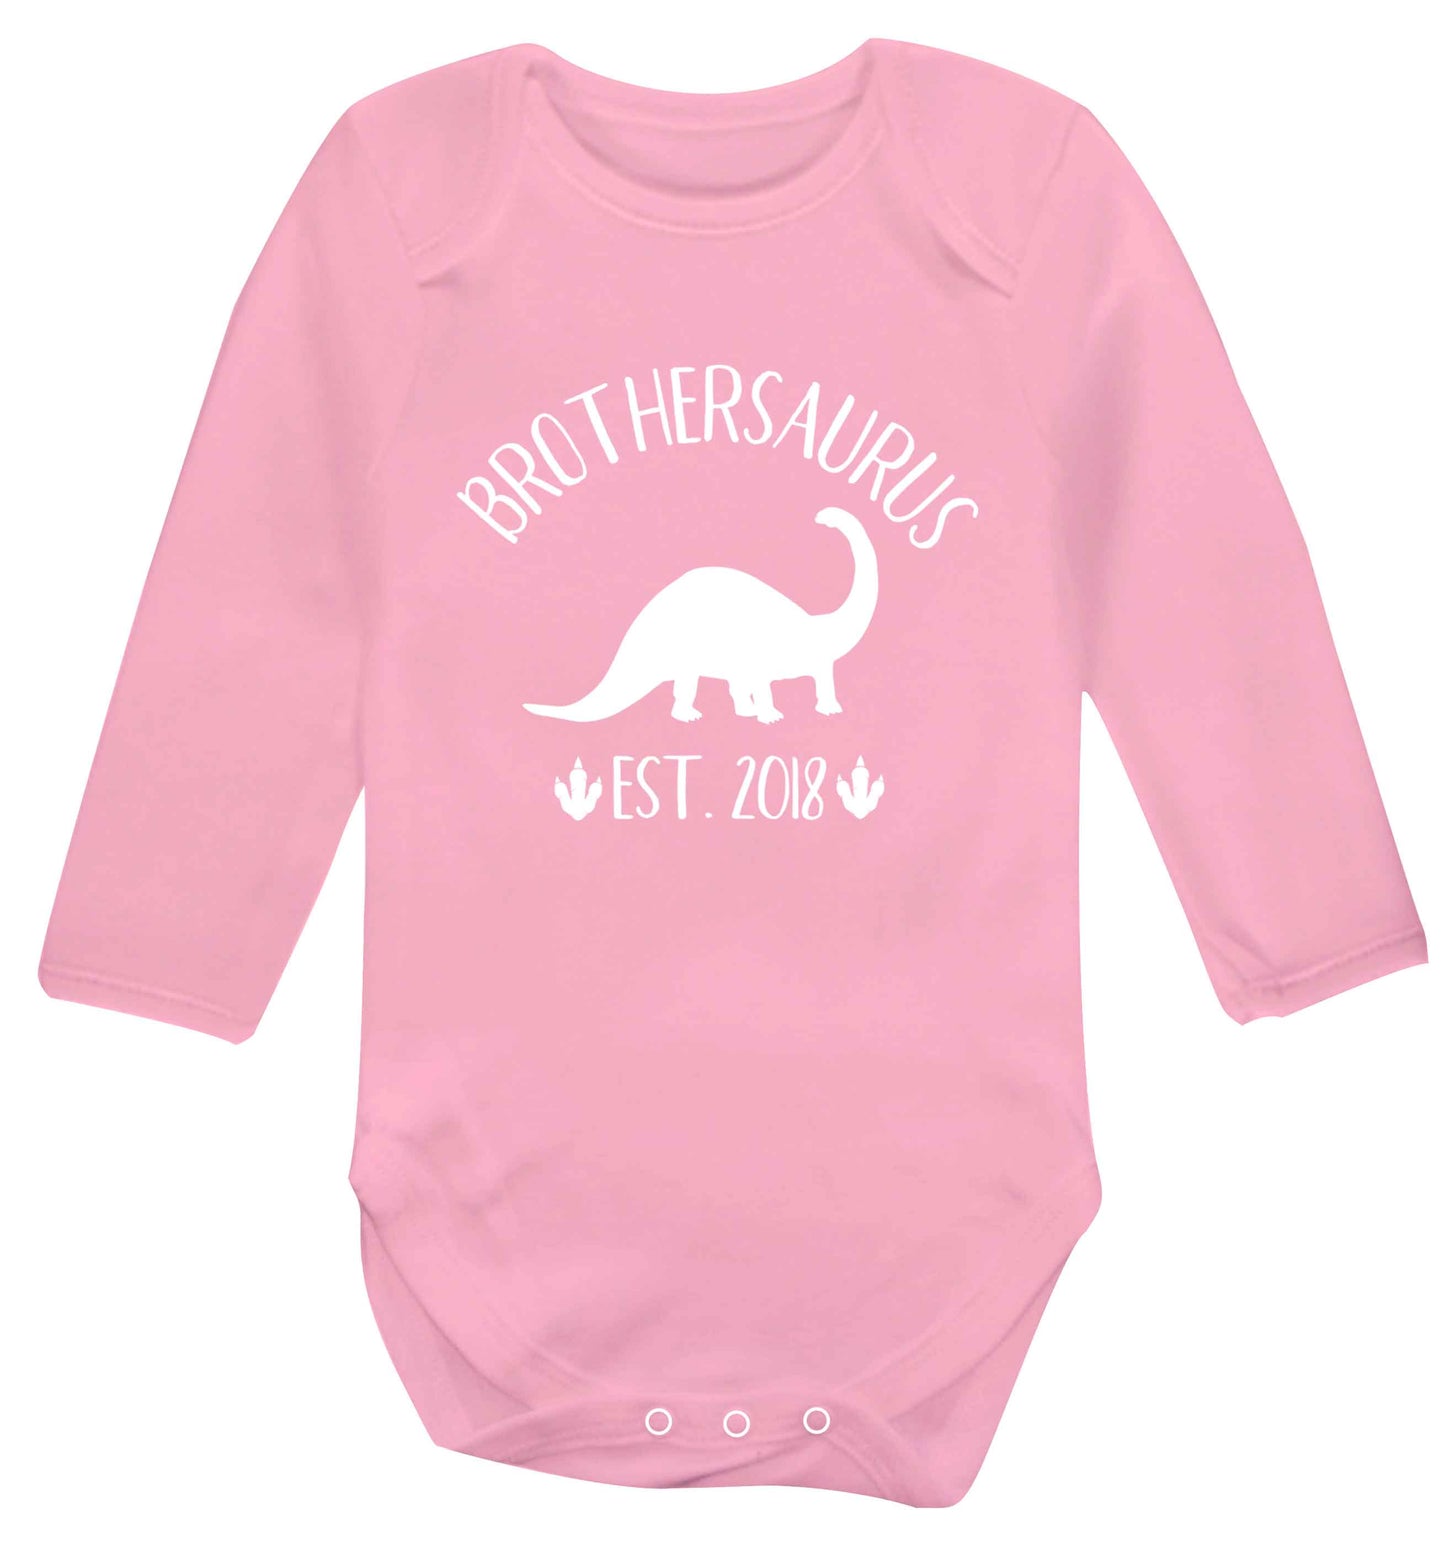 Personalised brothersaurus since (custom date) Baby Vest long sleeved pale pink 6-12 months